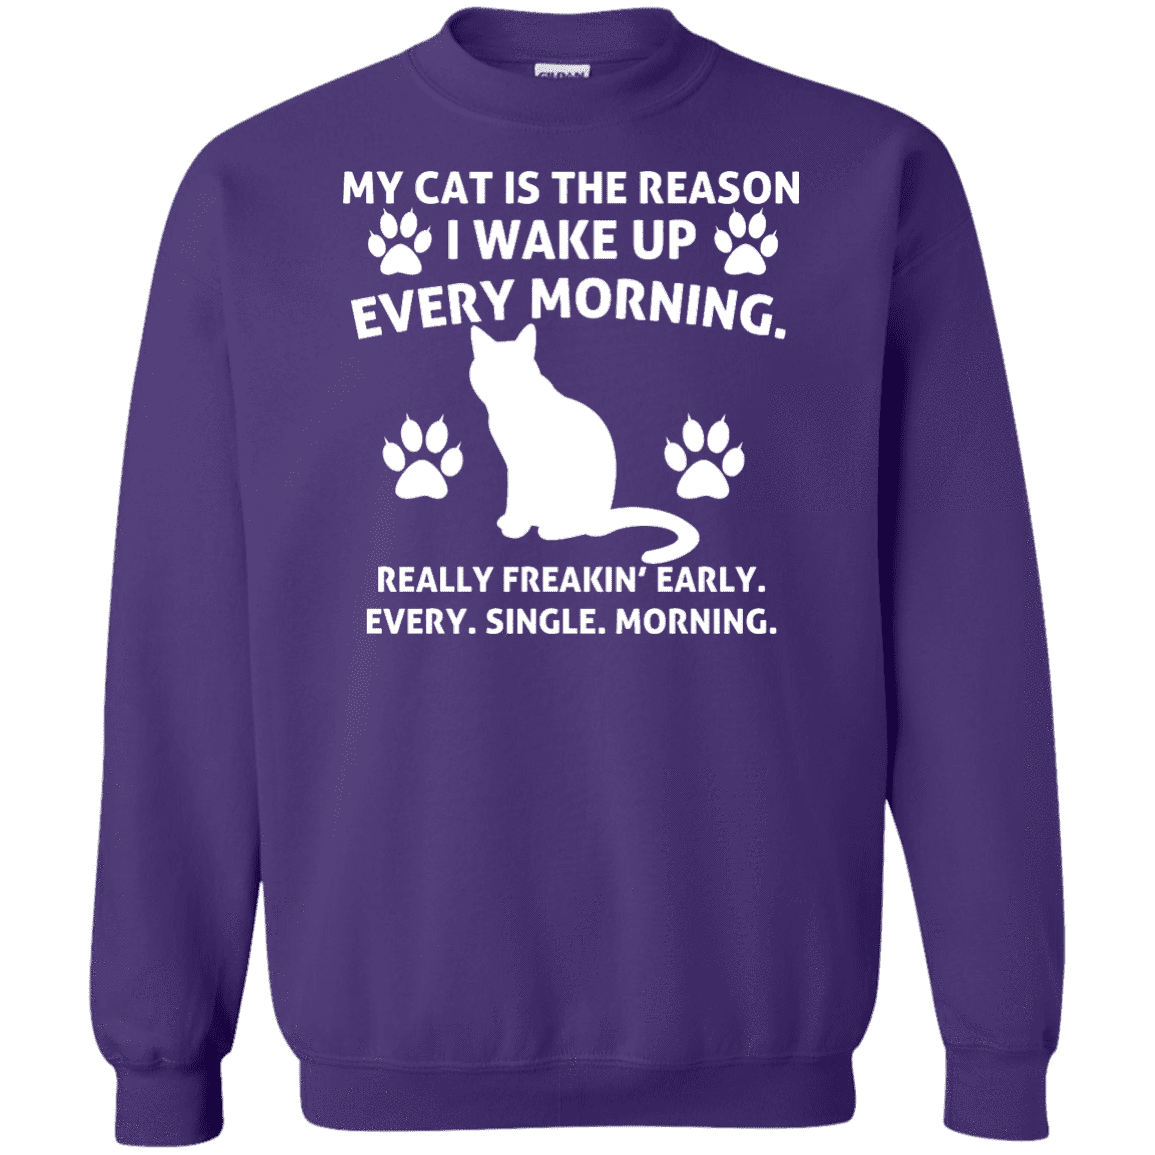 My Cat Is The Reason - Sweatshirt.